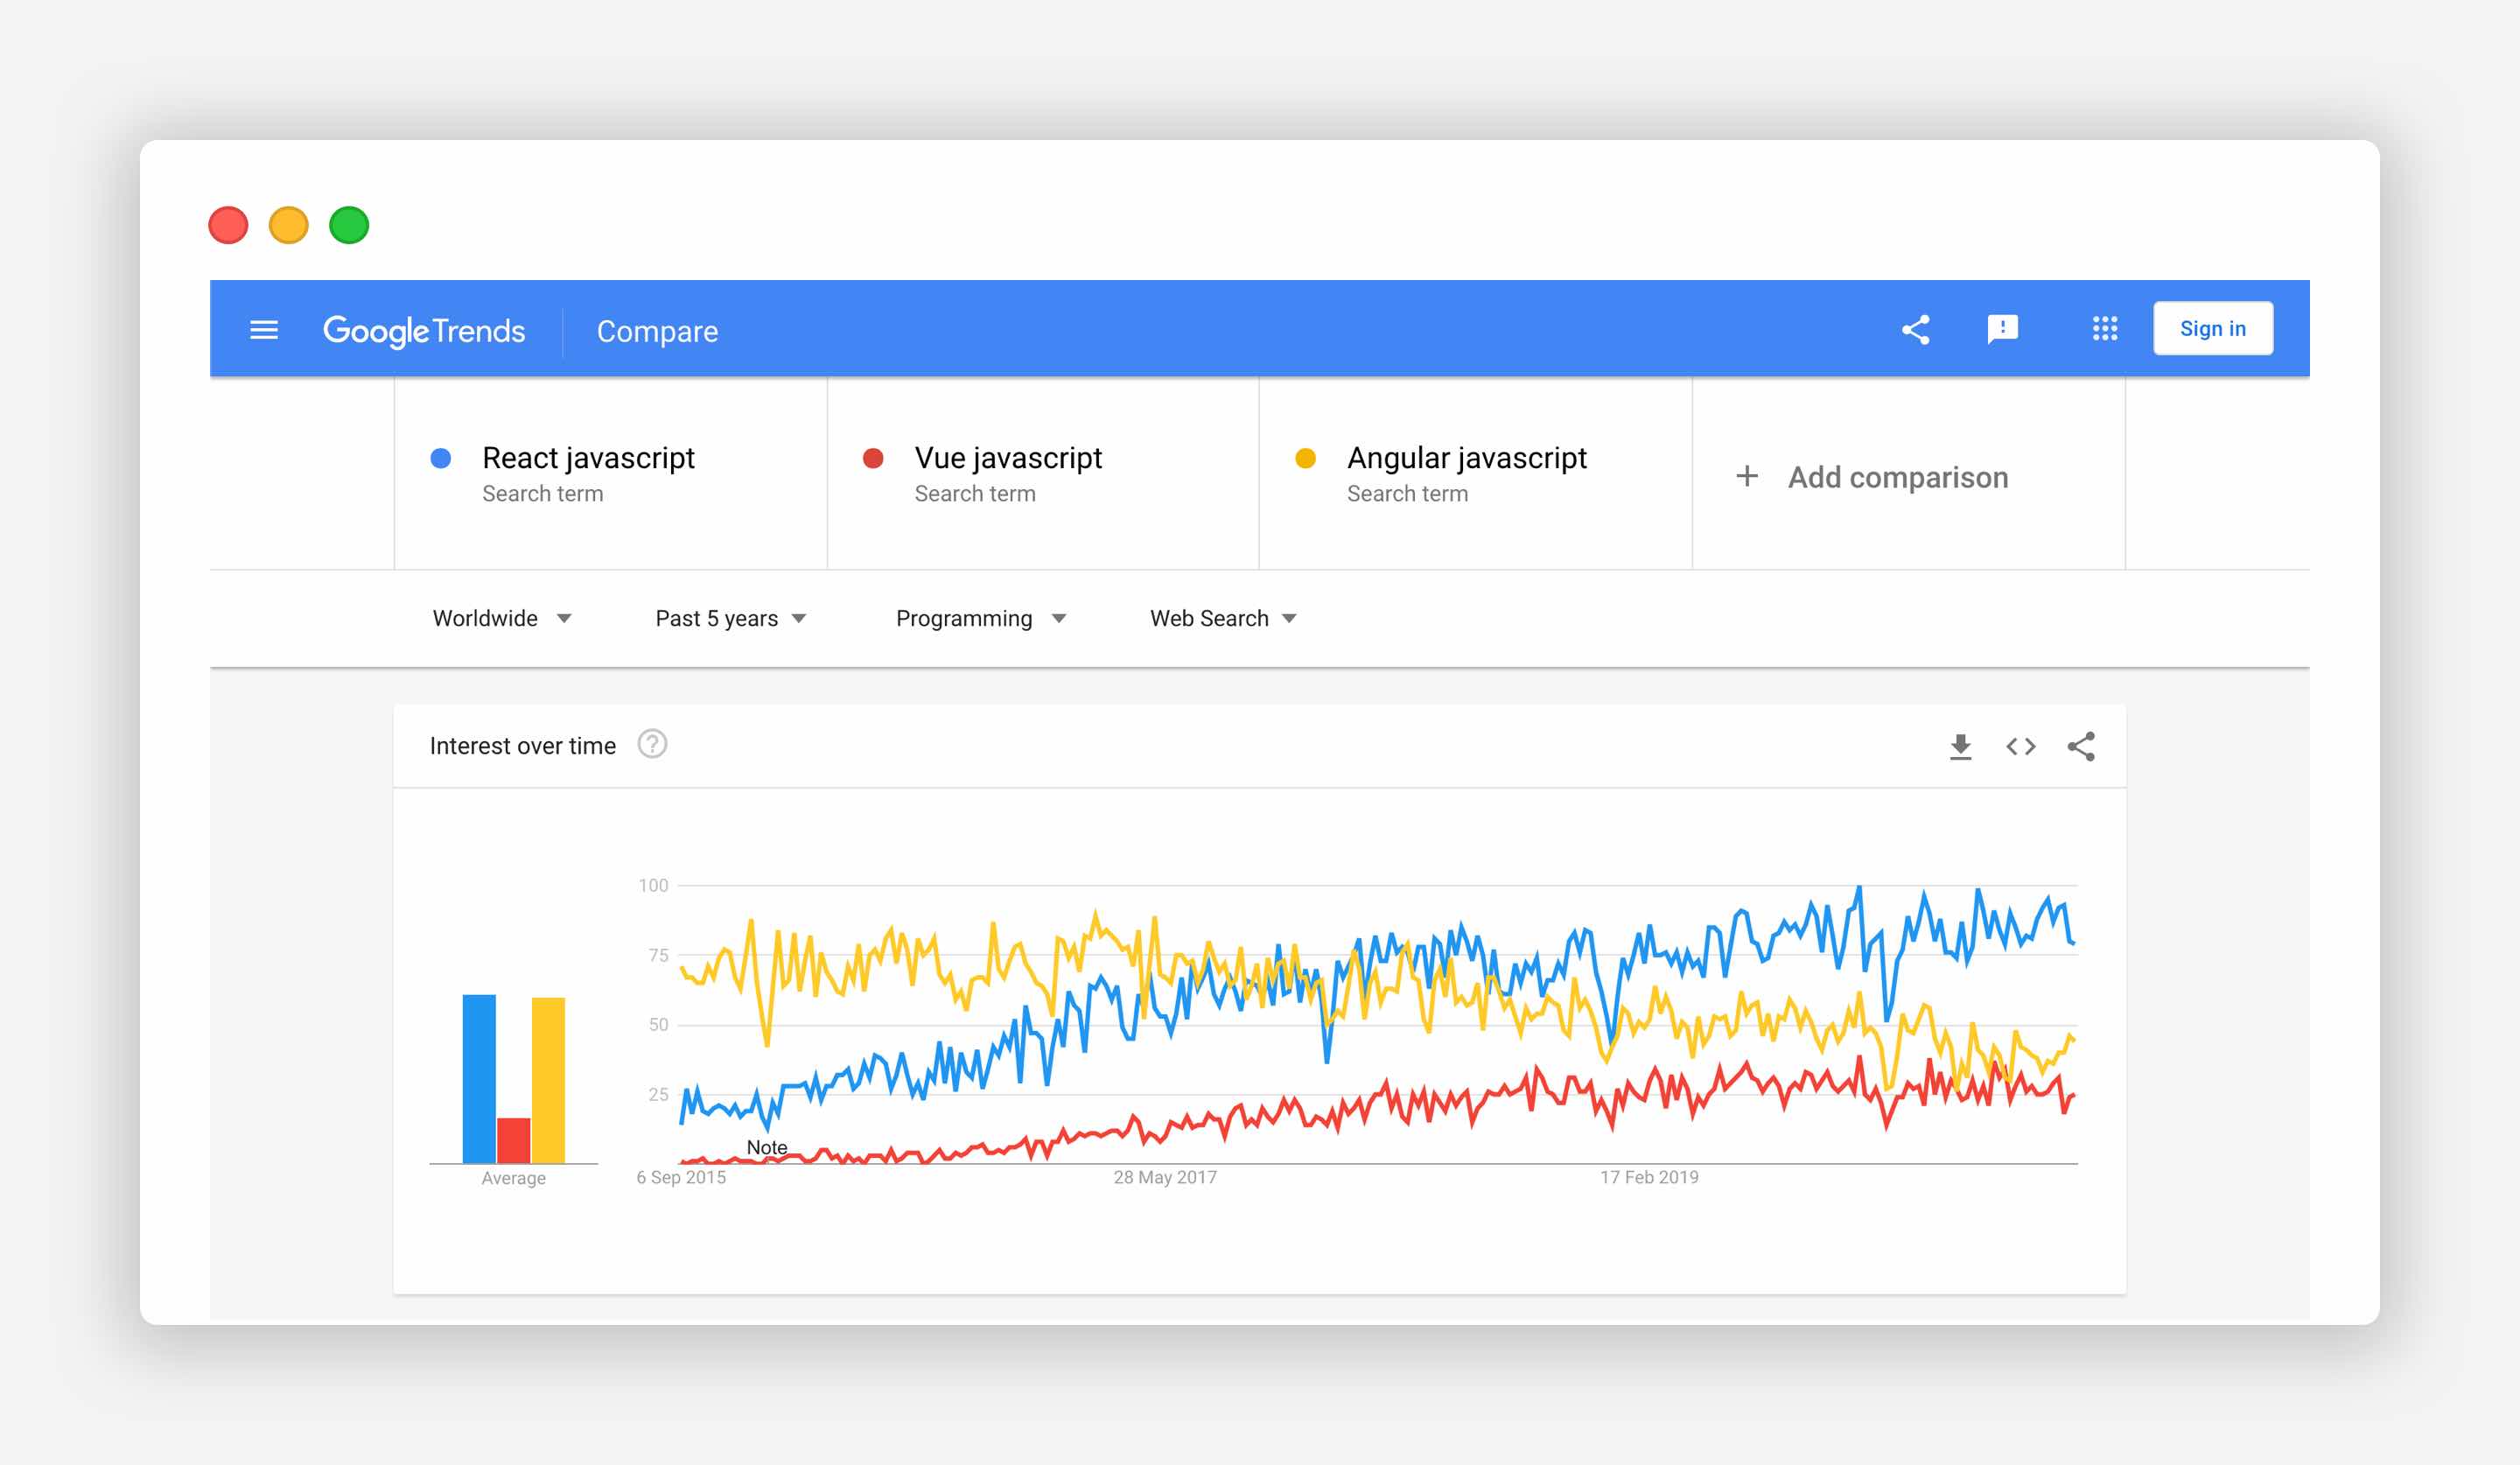 React Vue Angular Google Trends comparison Worldwide search